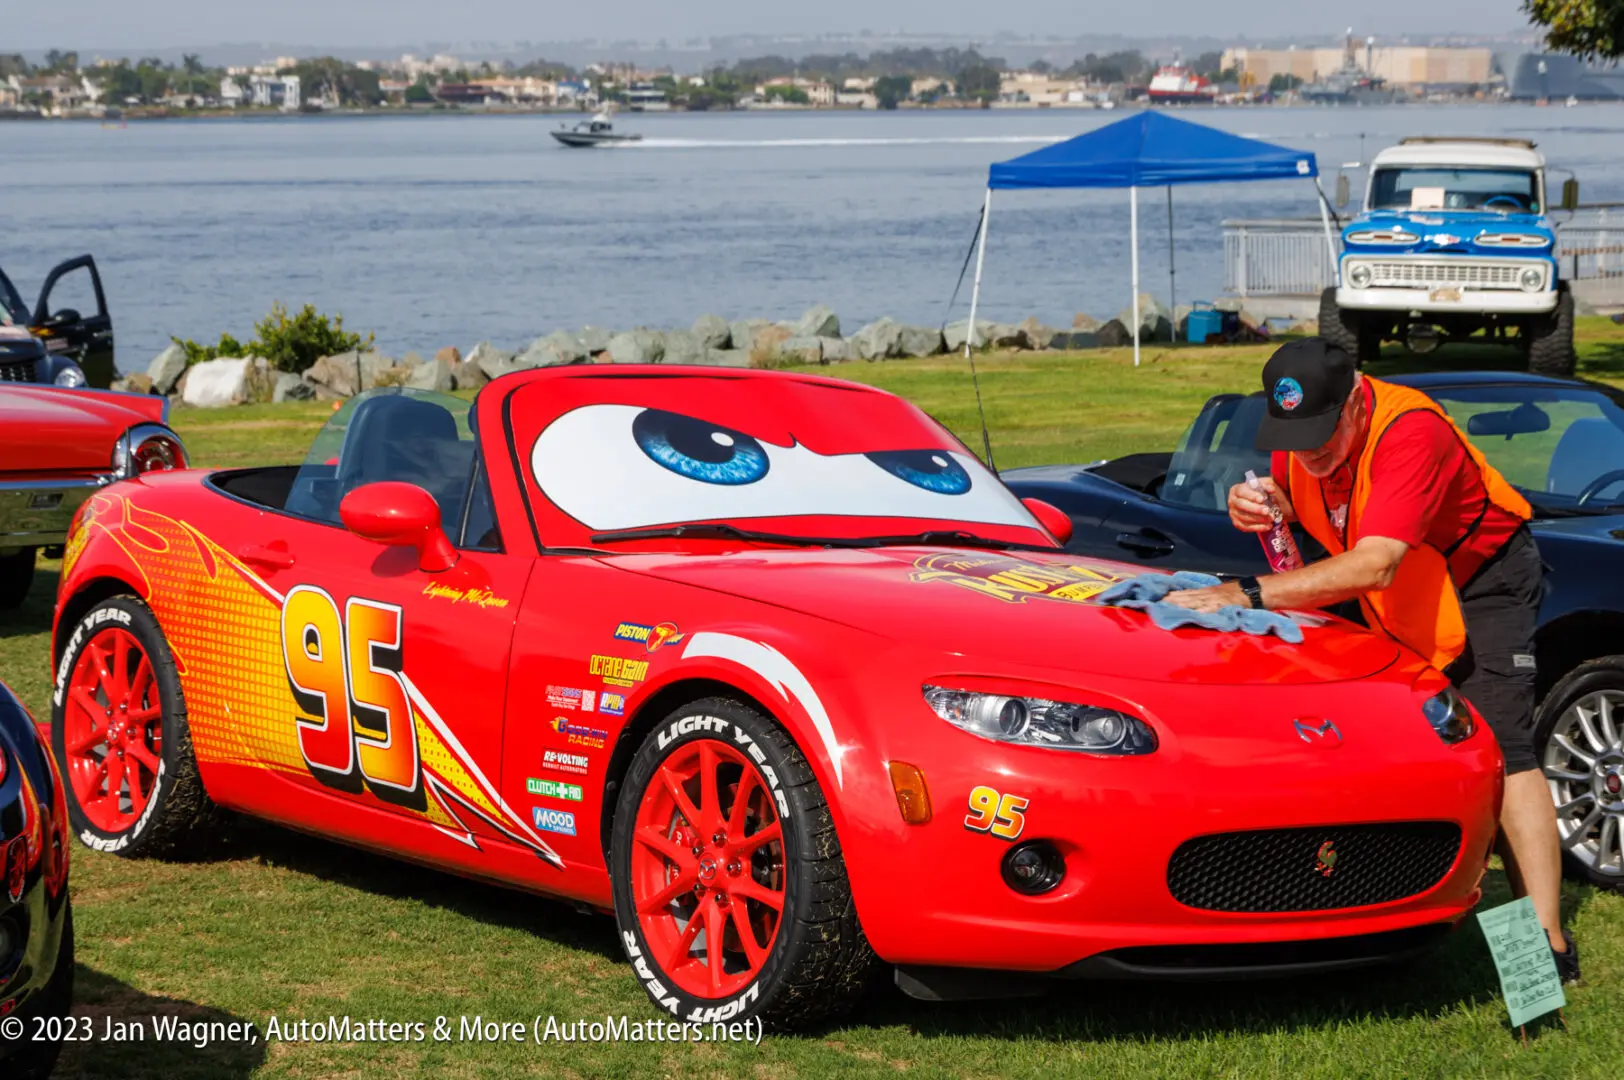 02202-20230729 Corvette Owners Club of SD—Main Street America Car Show—w San Diego Miata Club—Embarcadero Marina Park North—Seaport Village-R3